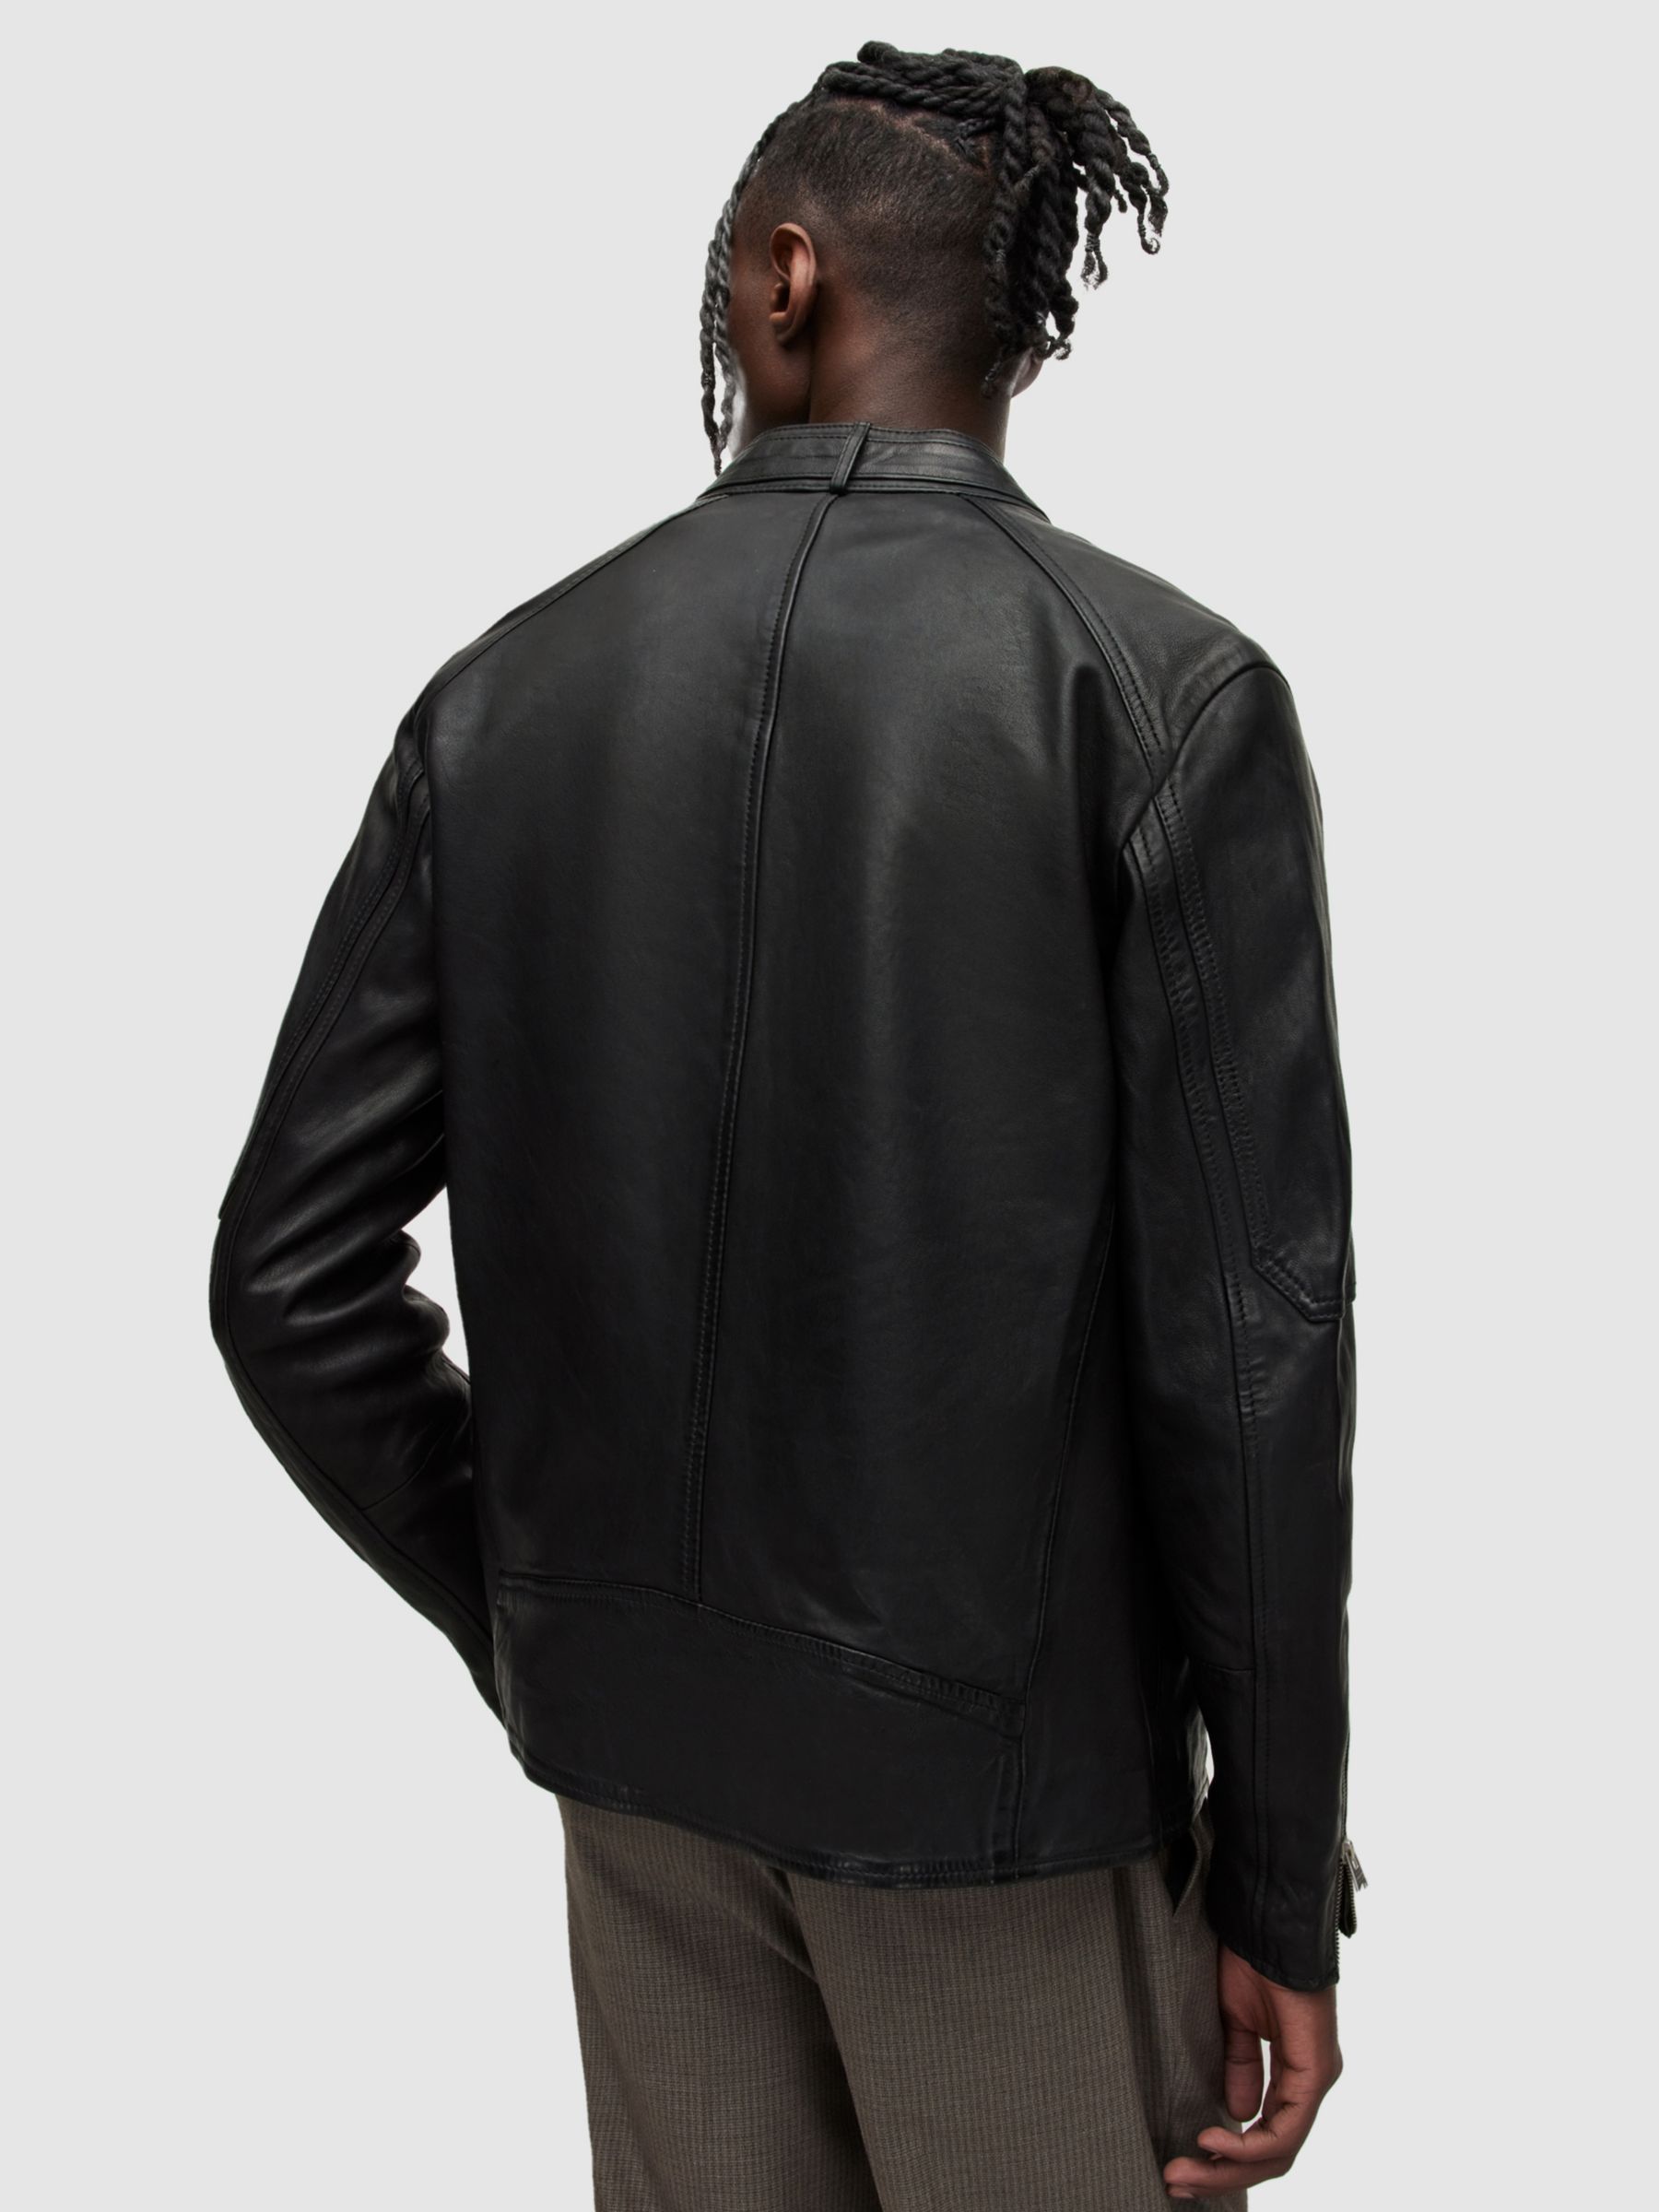 AllSaints Cora Leather Jacket, Jet Black, L